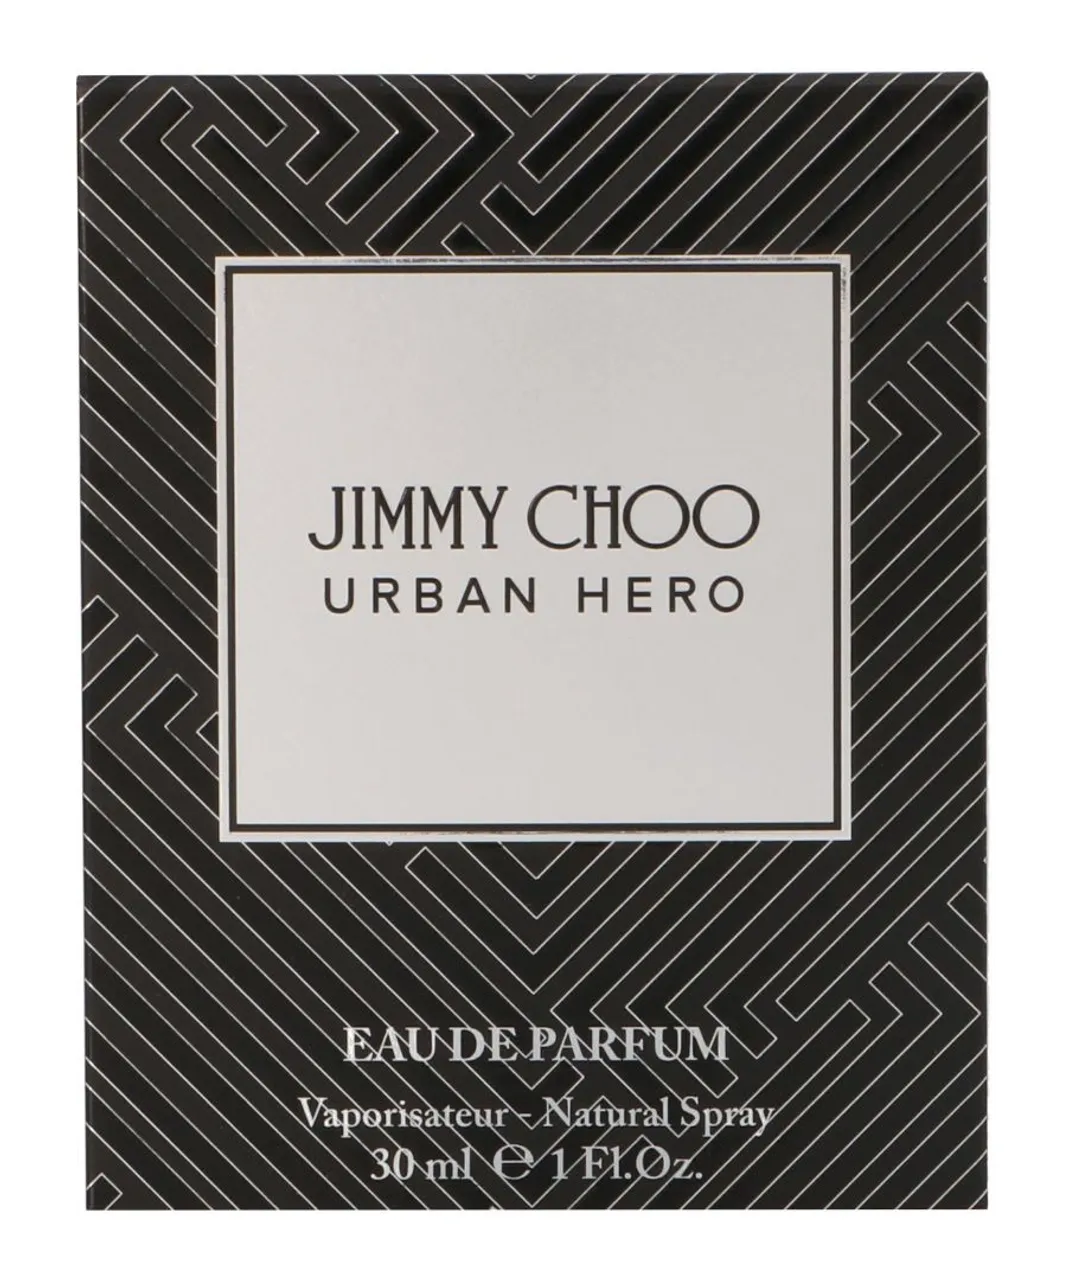 Jimmy Choo Mens Urban Hero Eau de Parfum 30ml Spray For Him - NA - One Size